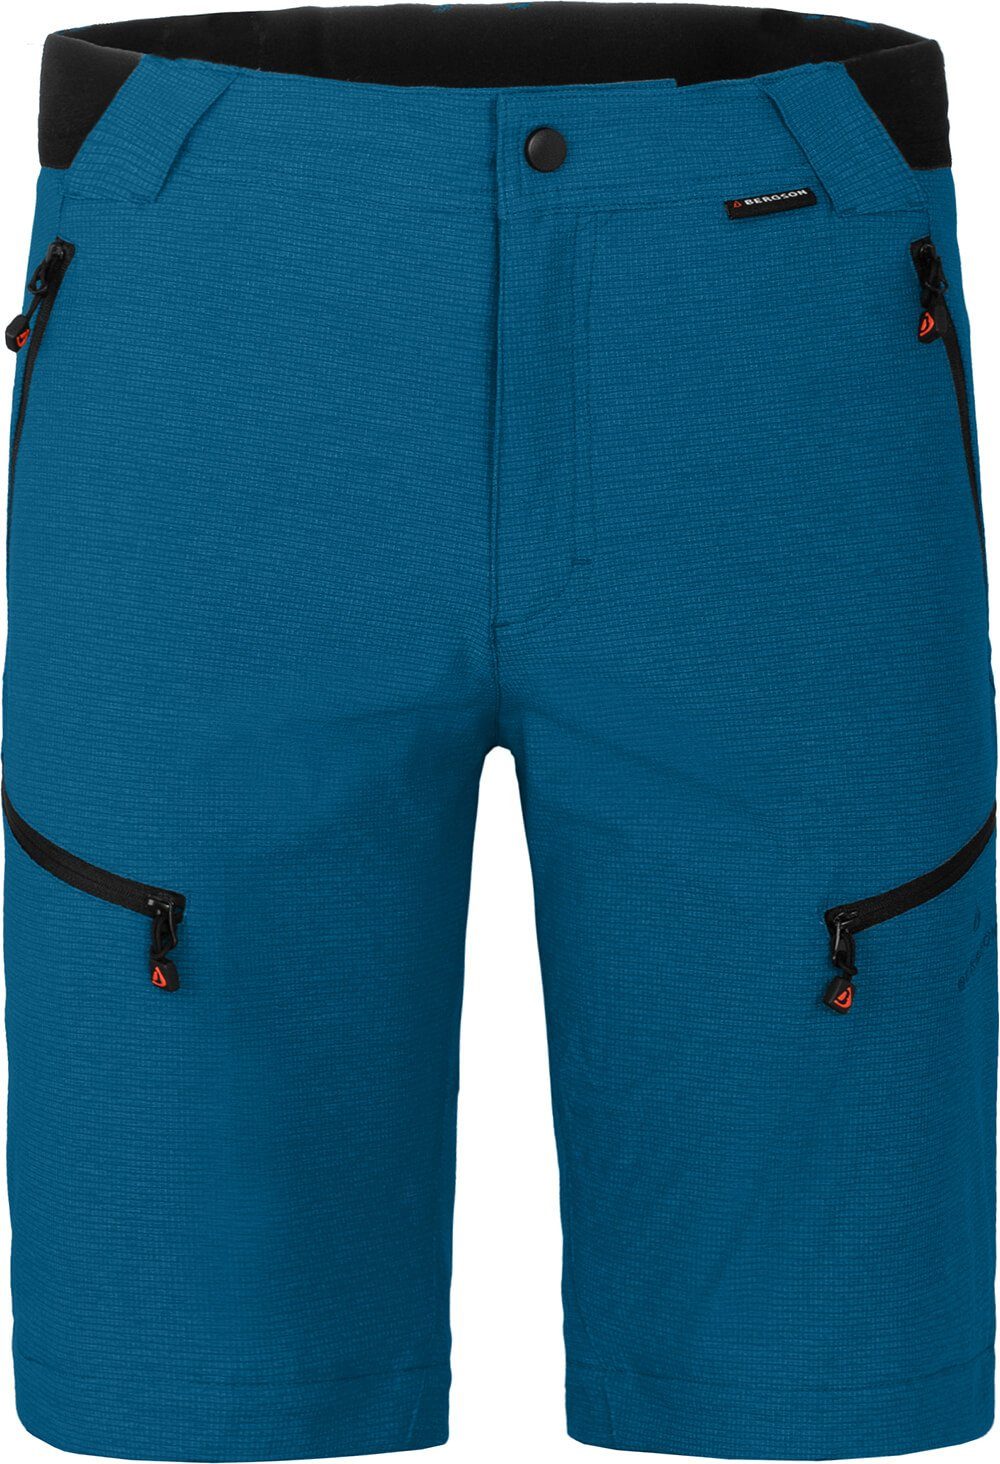 Saphir Bergson Herren Wanderhose, elastisch, blau Zipp-Off LEBIKO robust, Normalgrößen, Zip-off-Hose